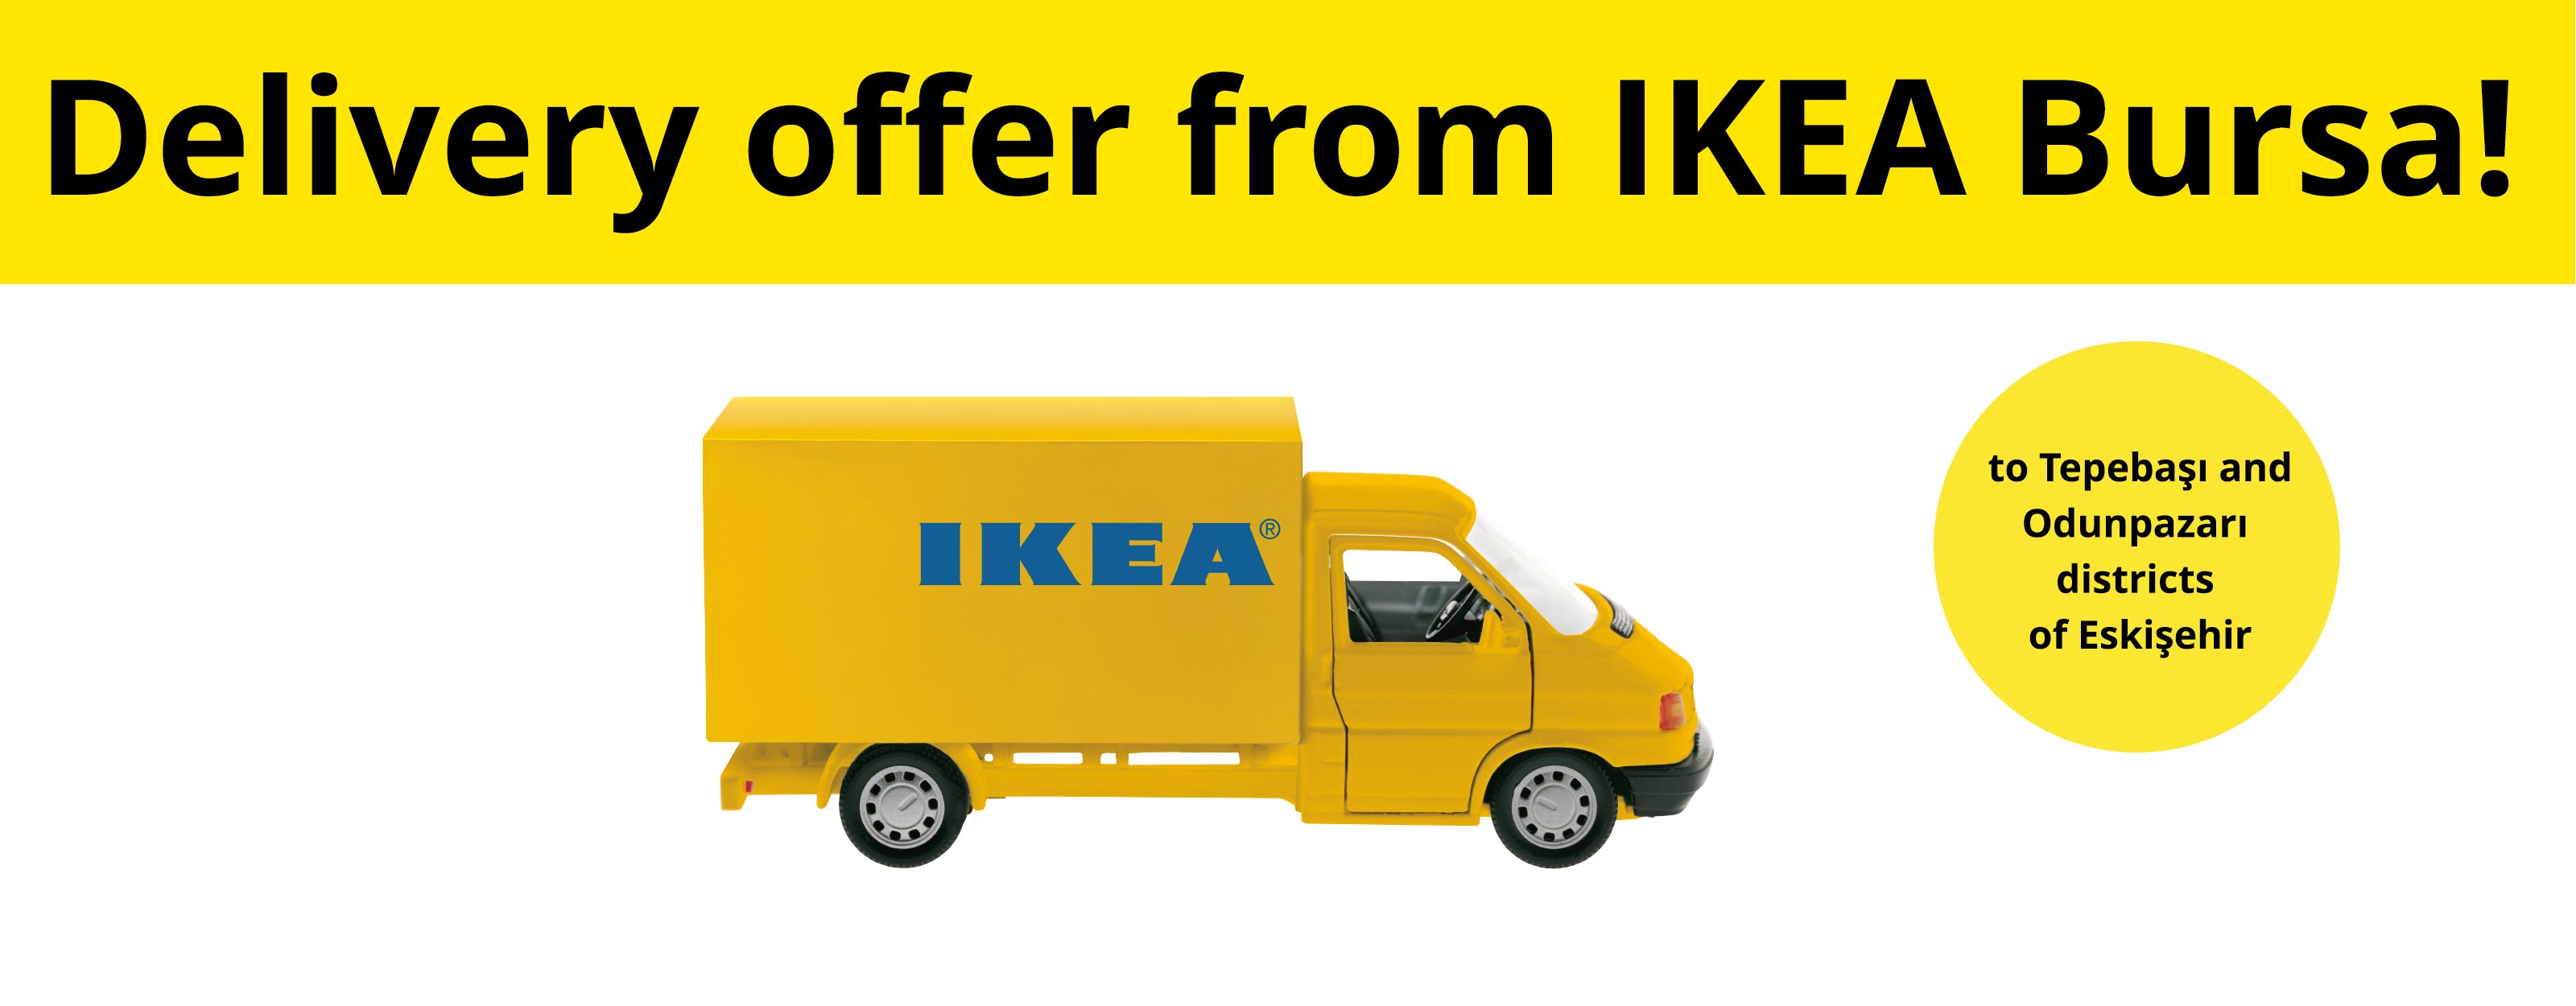 IKEA-ikea bursa eskisehir nakliye kampanyasi agustos detay en